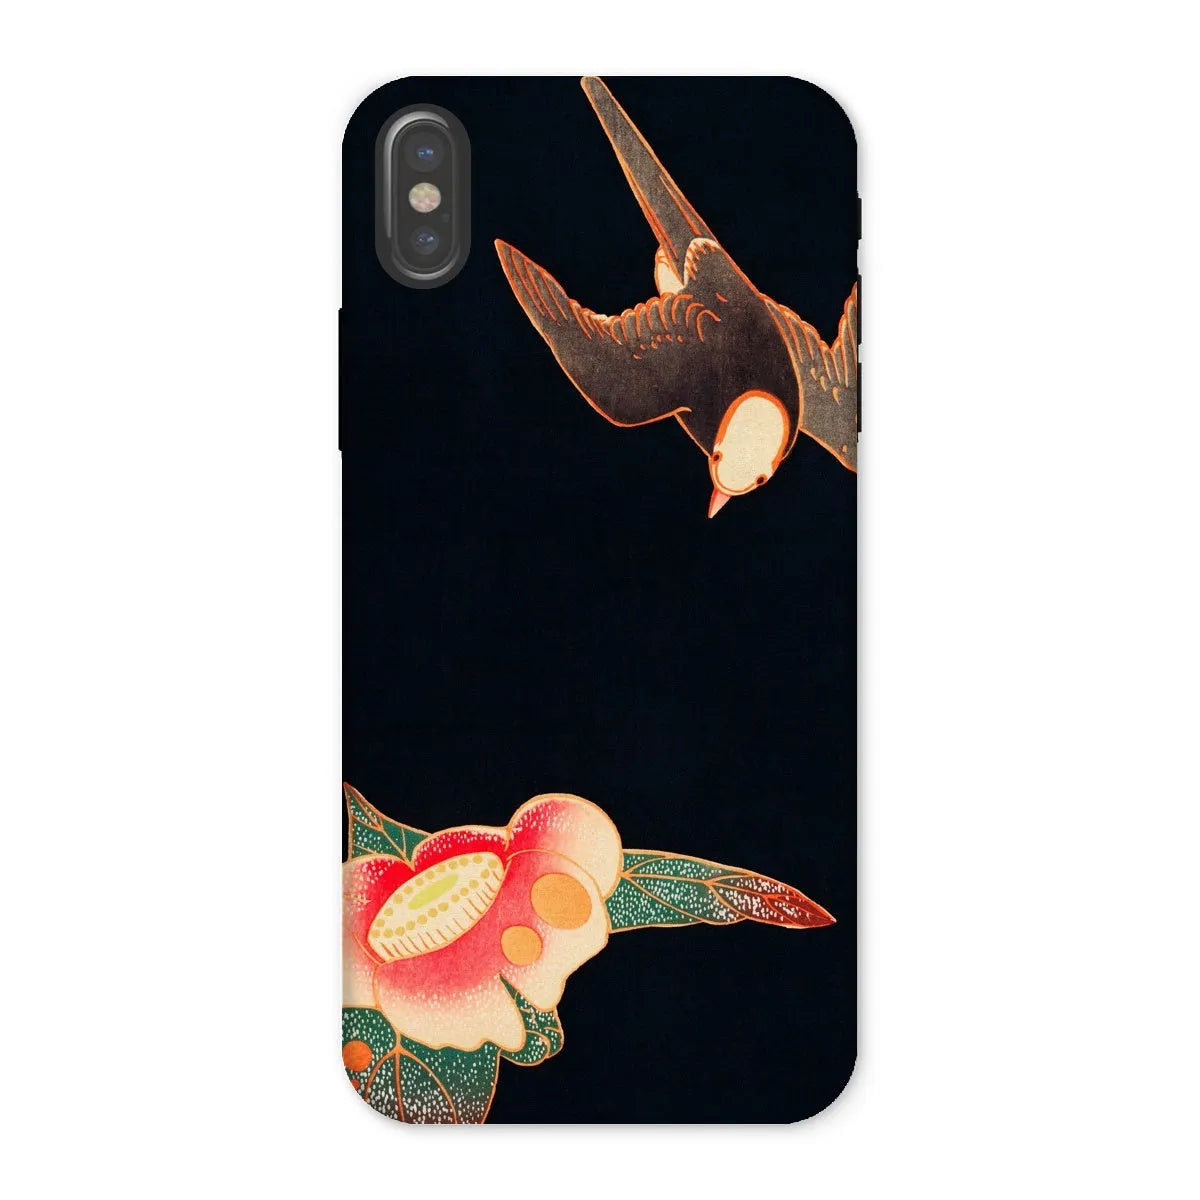 Swallow & Camellia - Meiji Era Art Phone Case - Ito Jakuchu - Iphone x / Matte - Mobile Phone Cases - Aesthetic Art